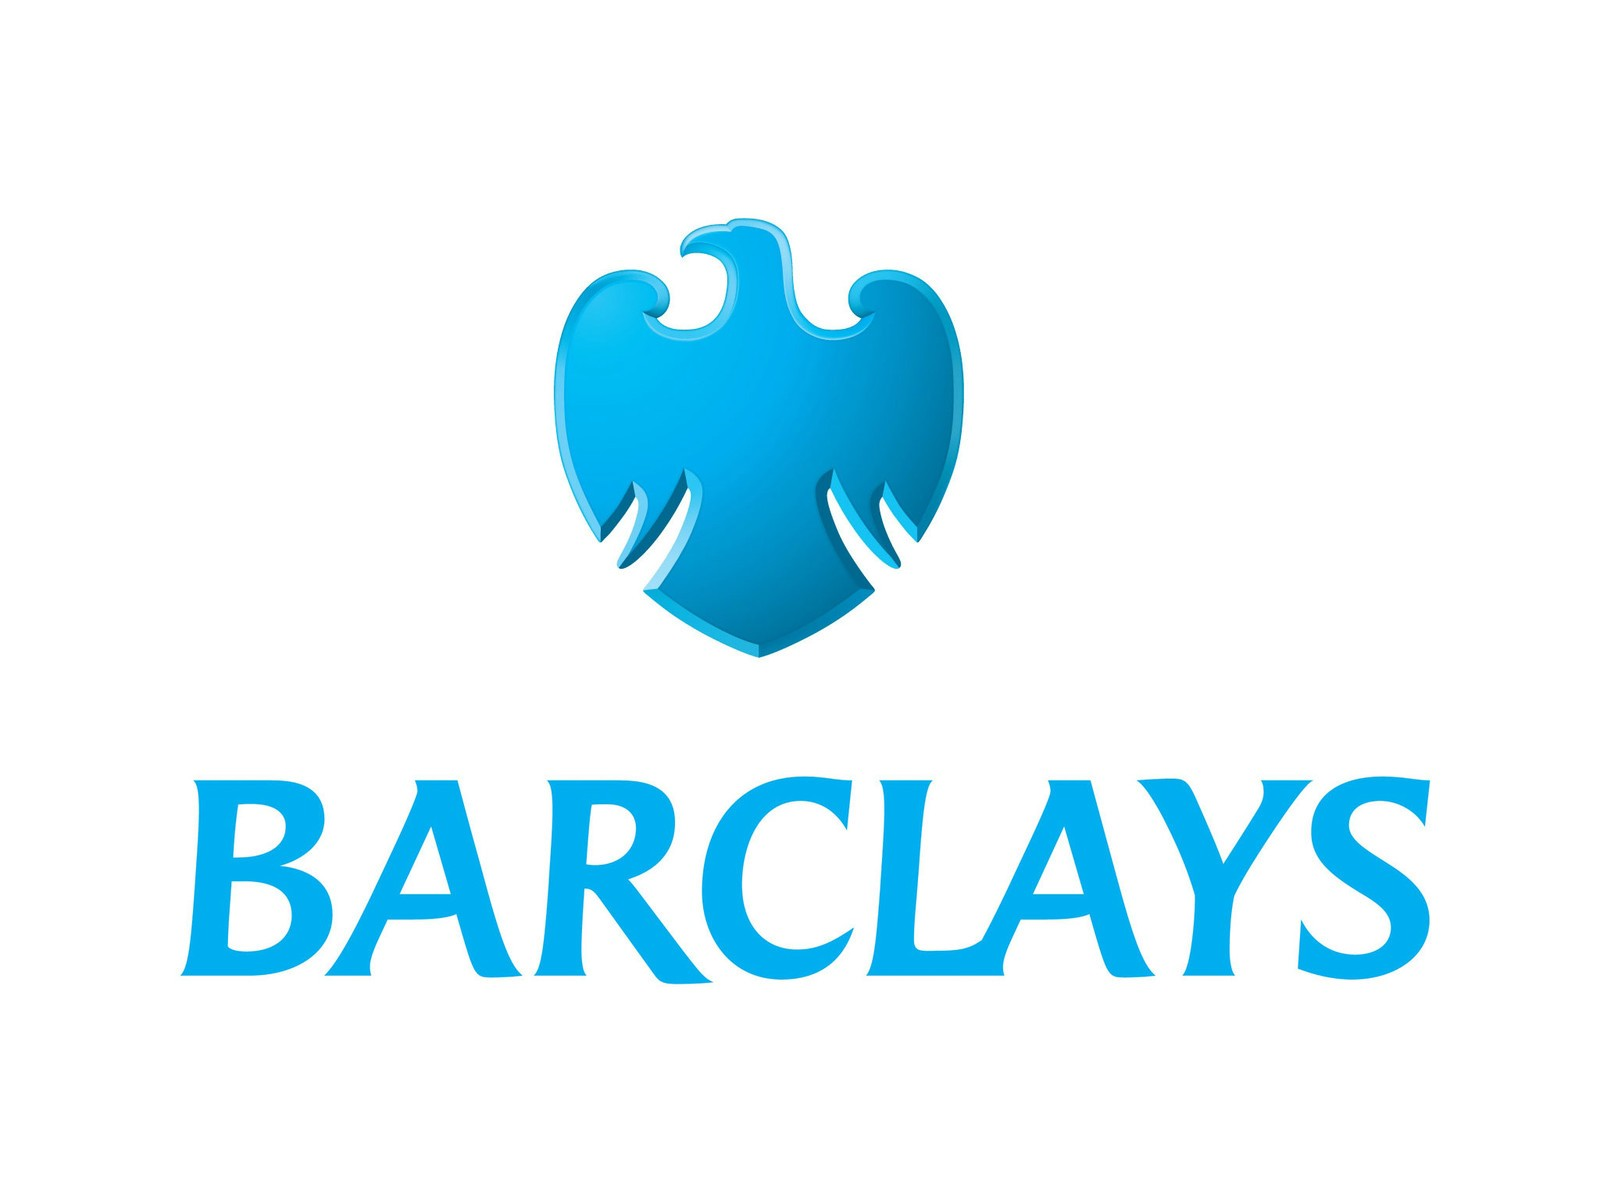 Barclays Bank: Purpose, Values, FAQ, Contact  Details